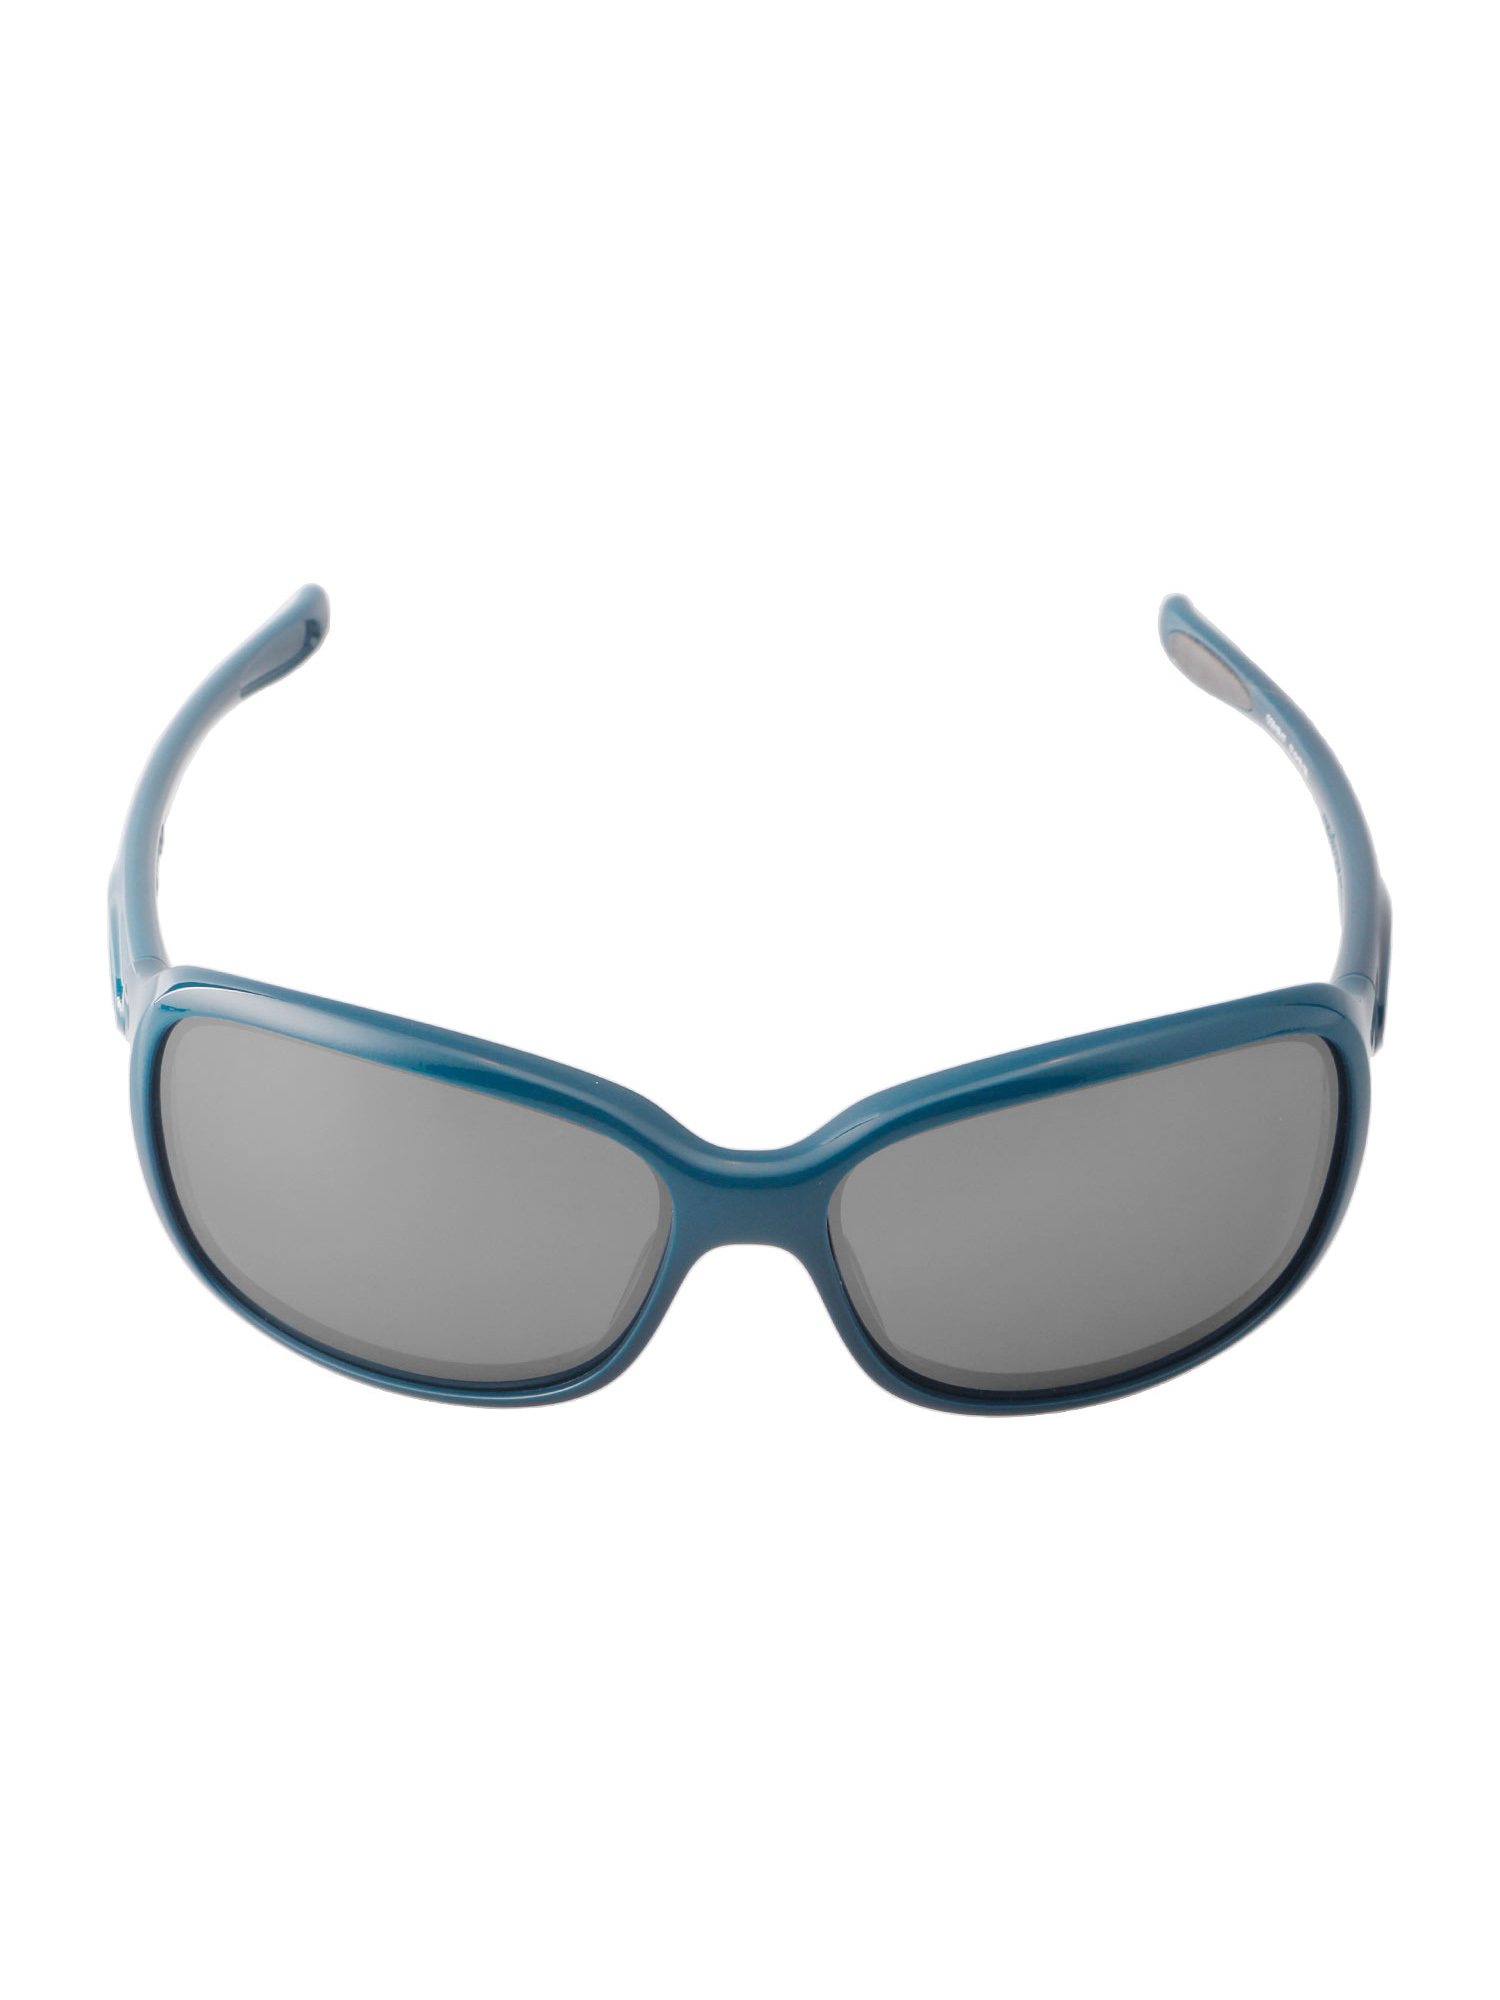 Walleva Titanium Polarized Replacement Lenses for Oakley Urgency Sunglasses - image 5 of 6